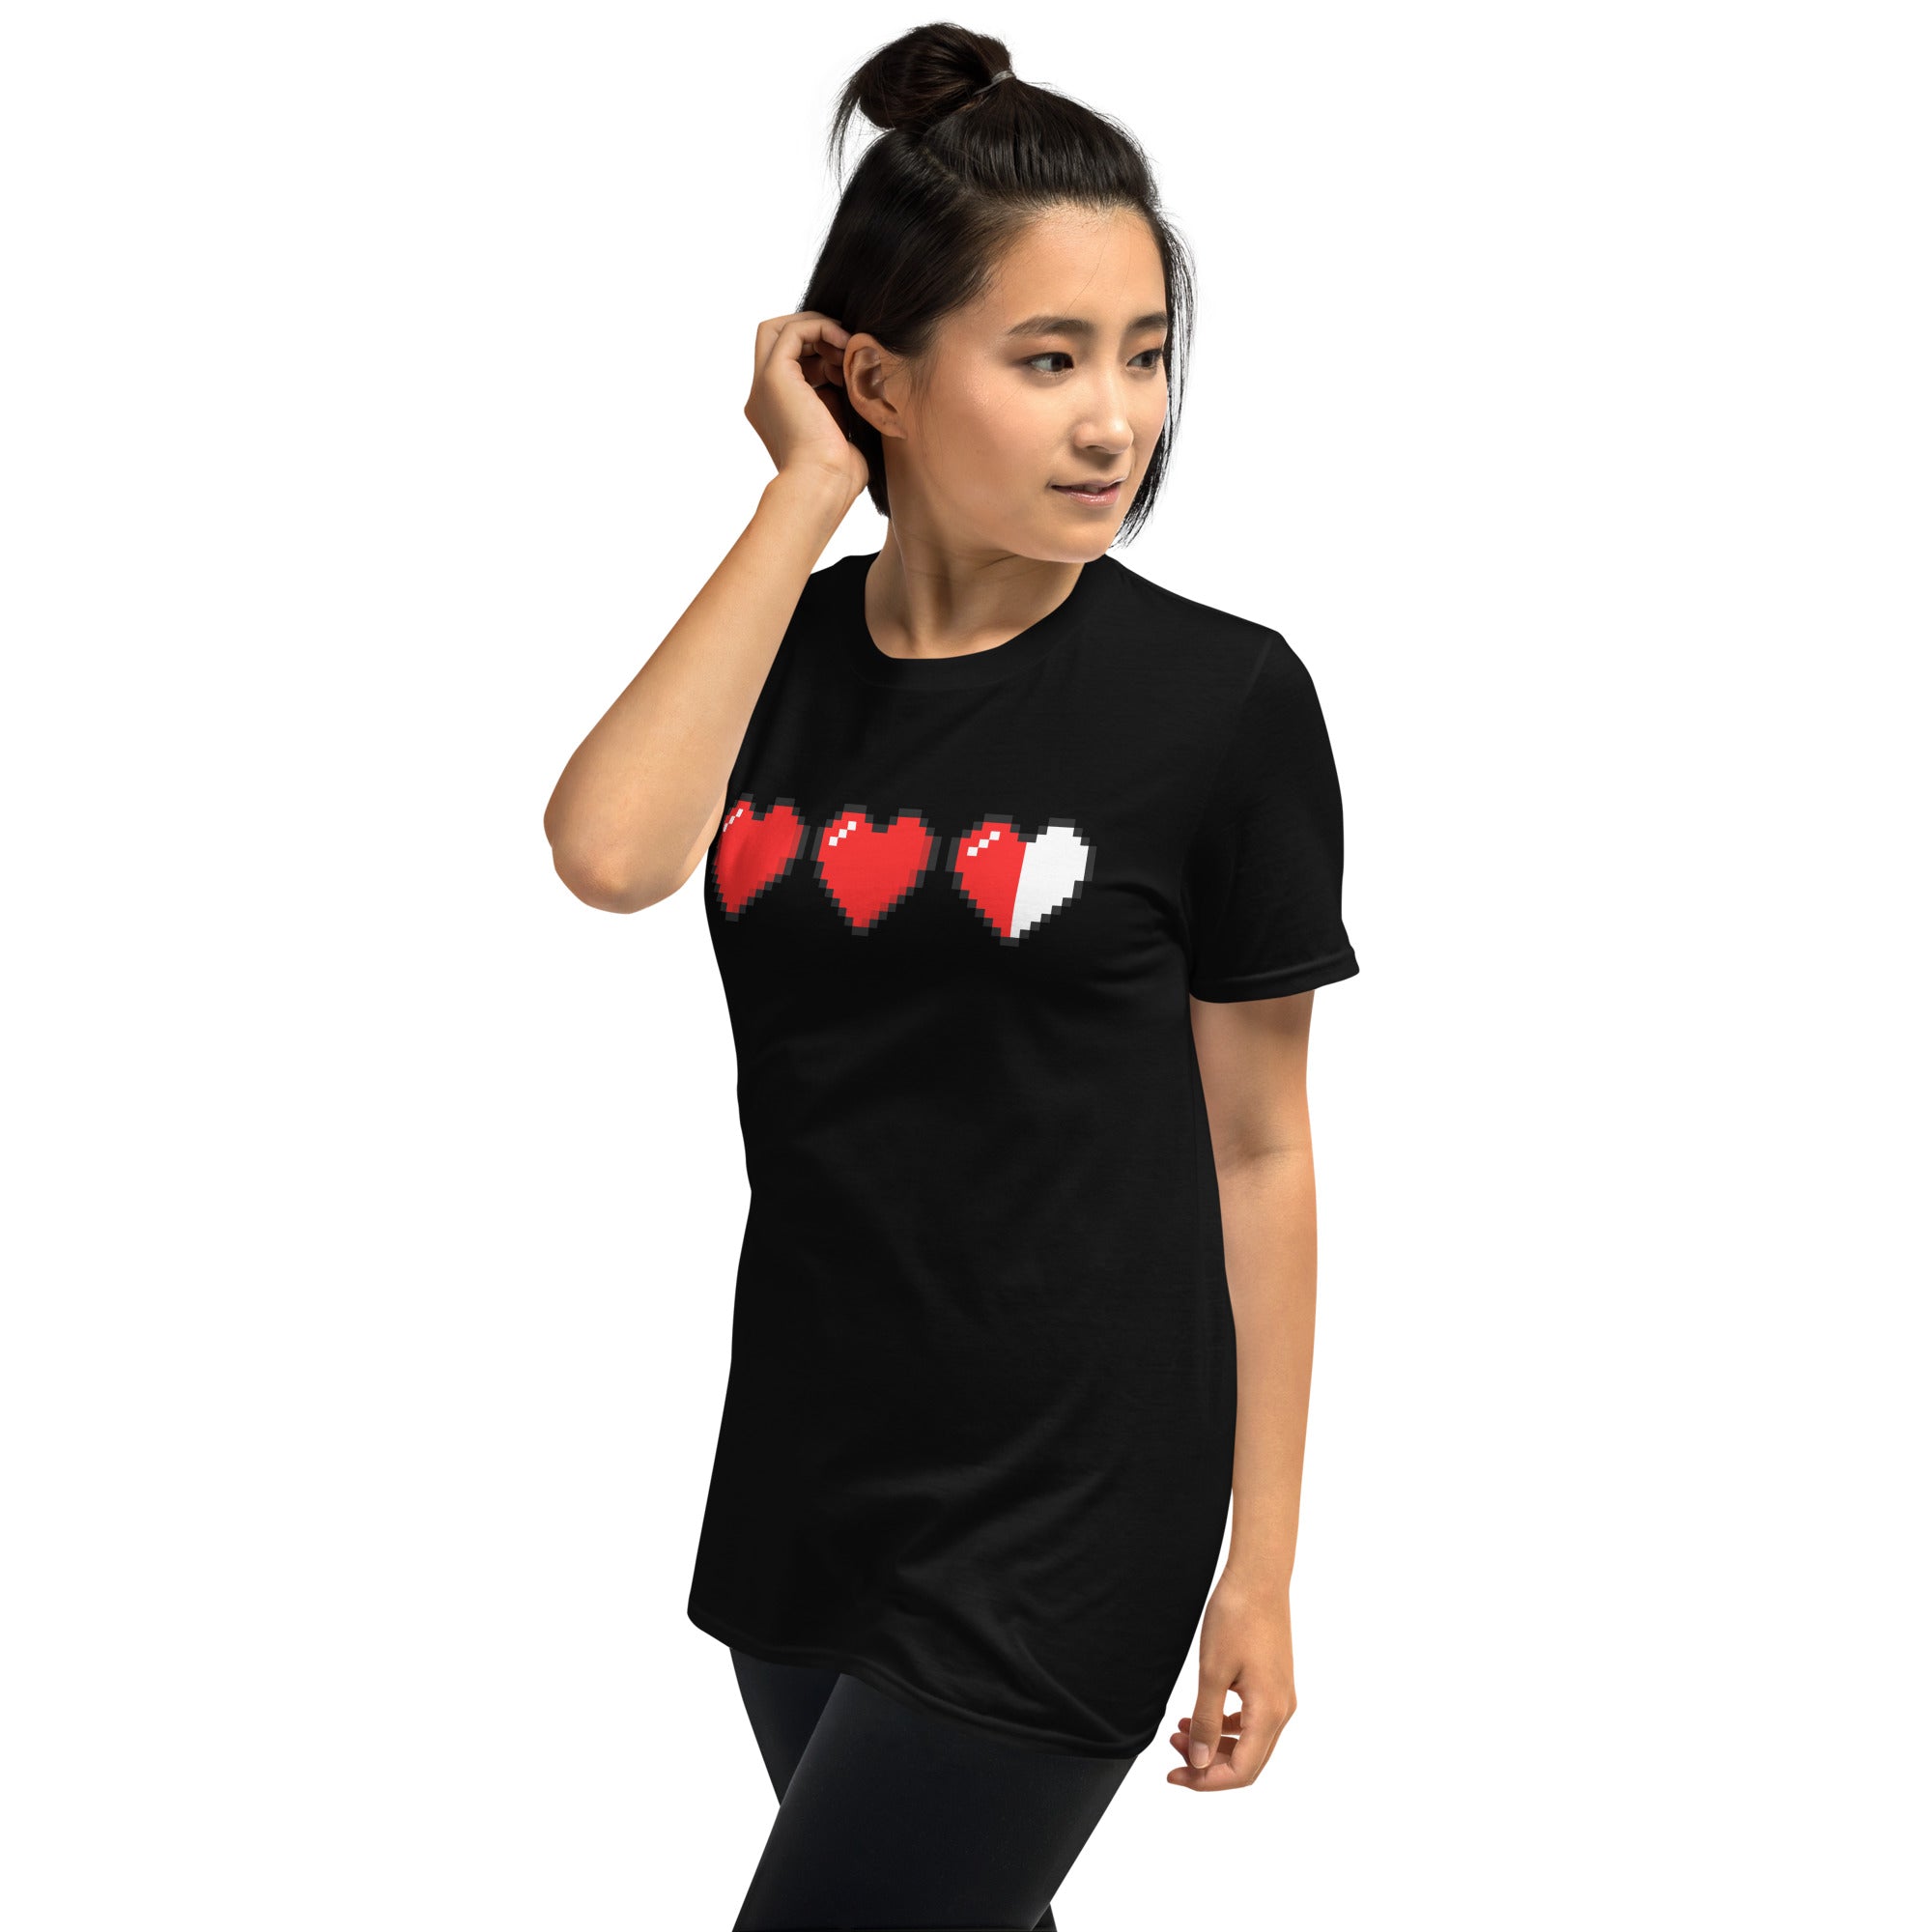 3 Heart Meter Retro 8 Bit Video Game Pixelated Short-Sleeve T-Shirt